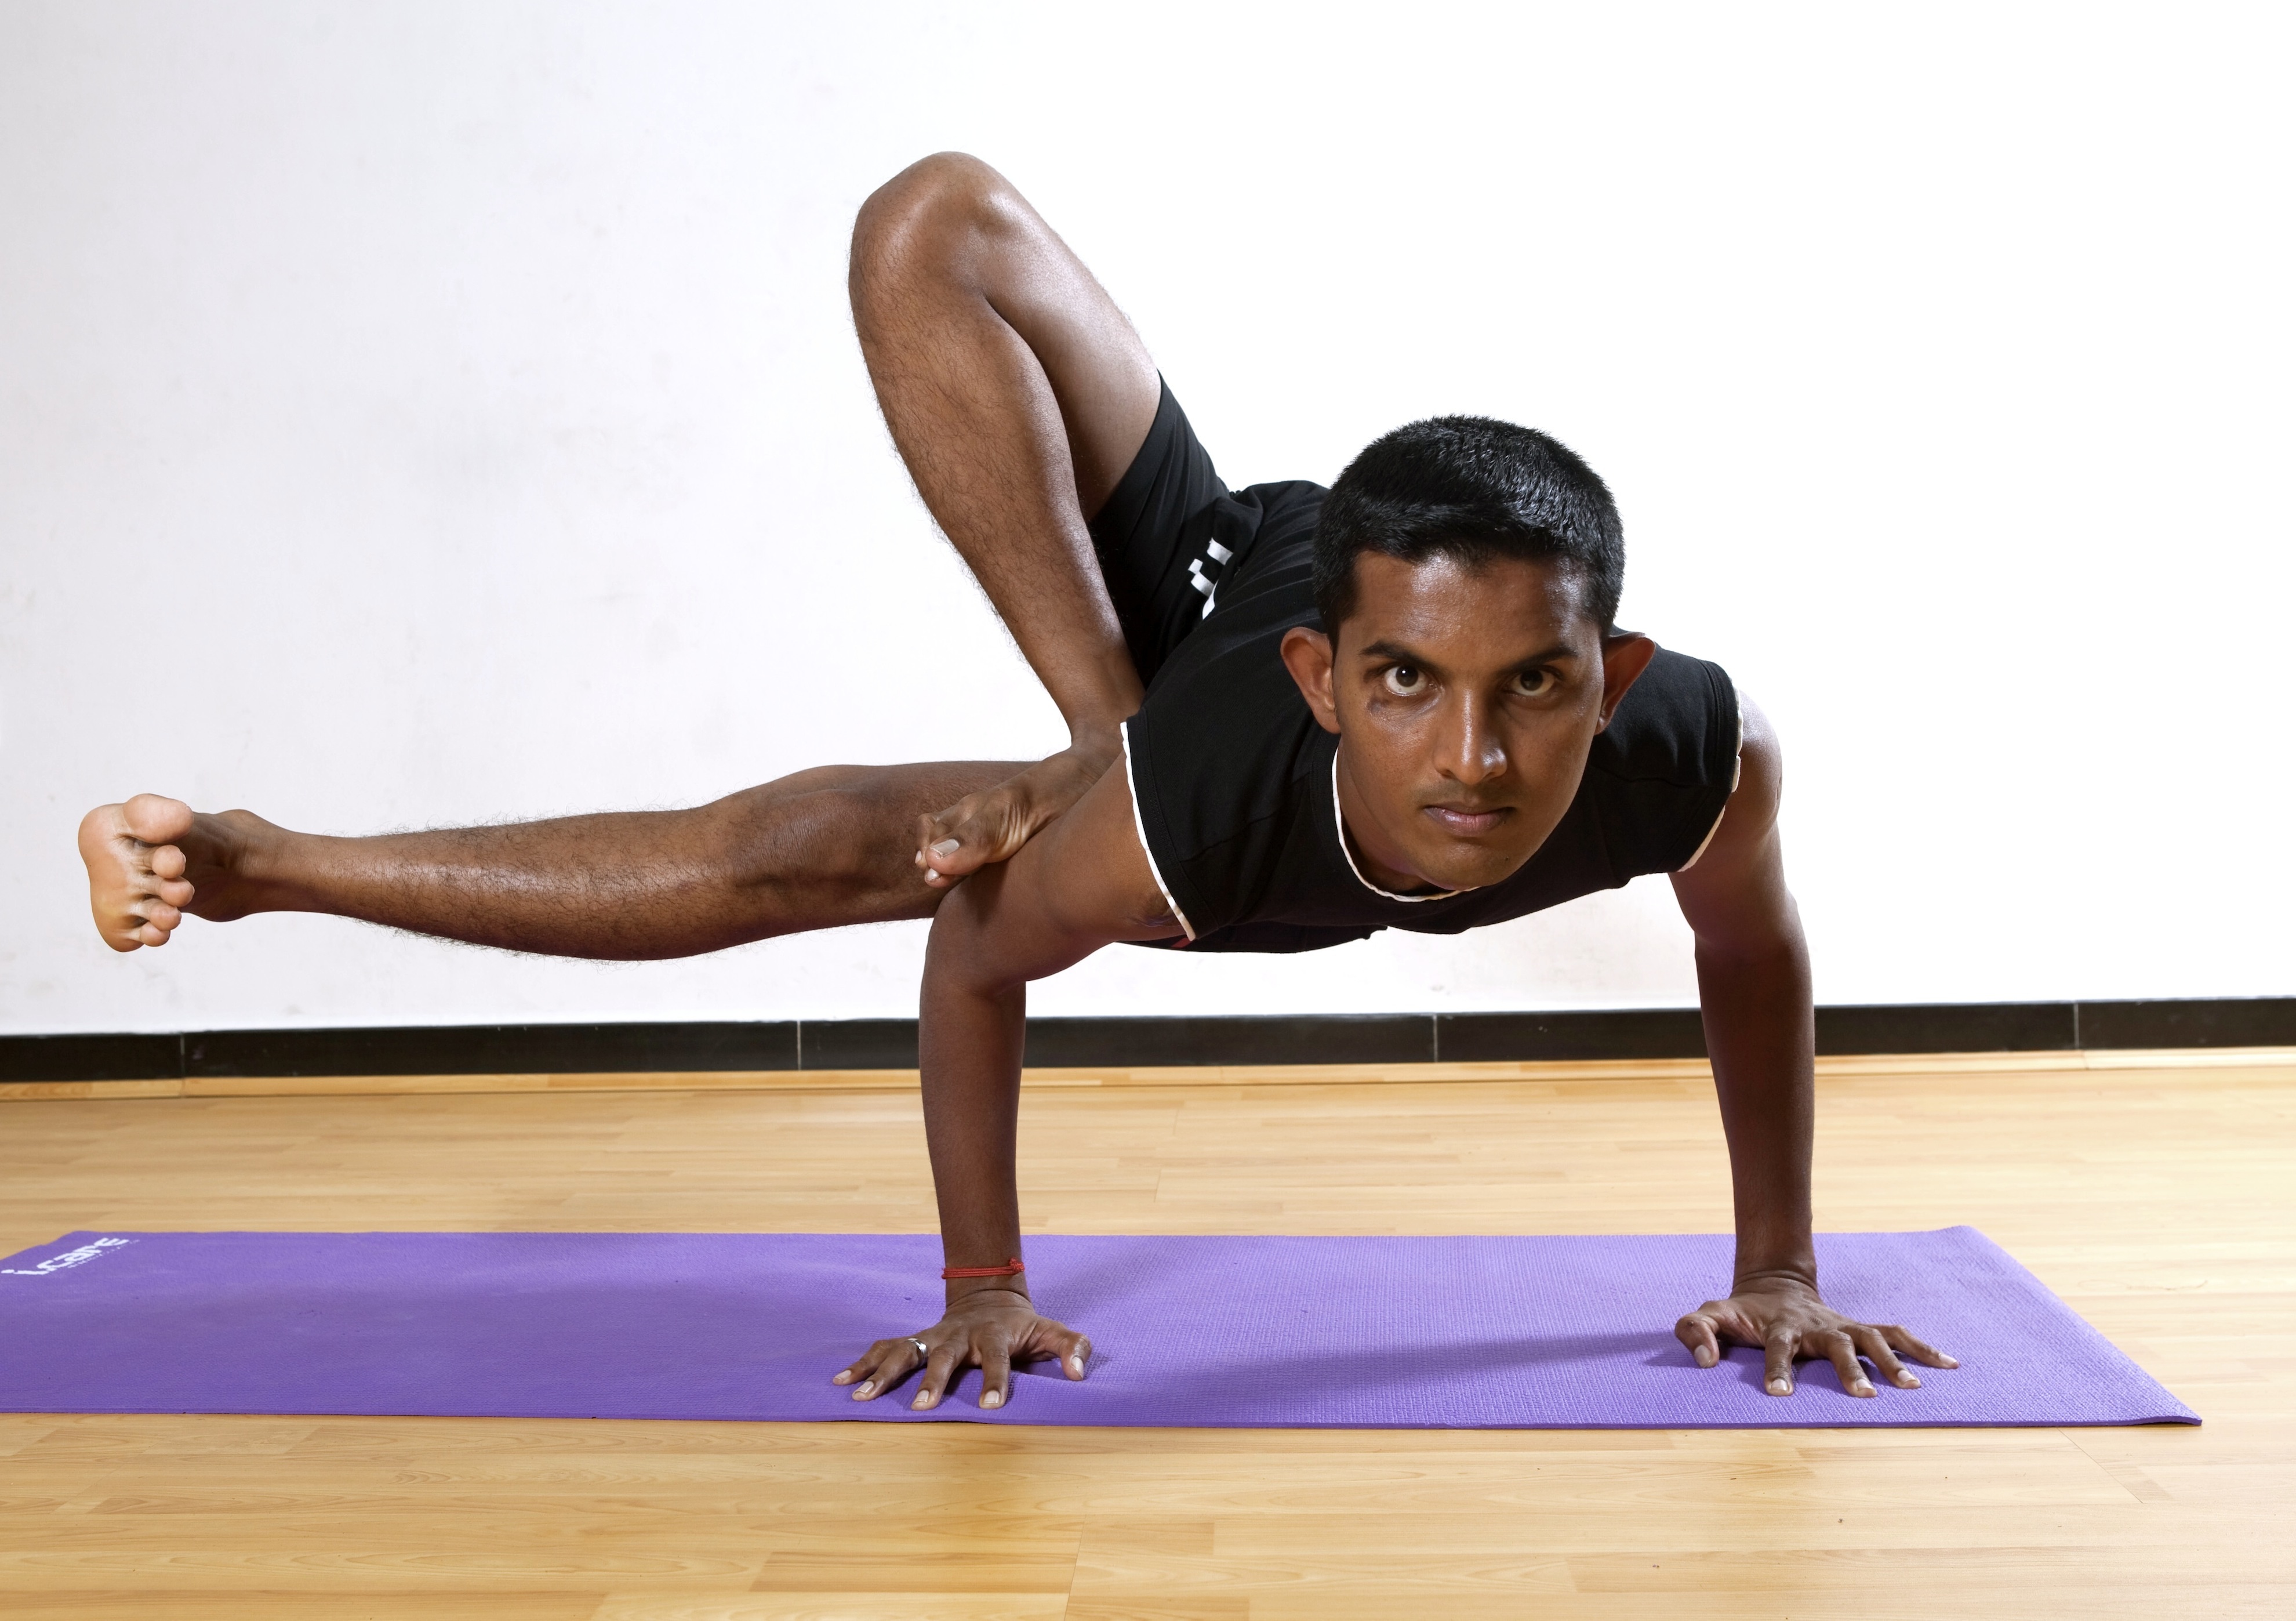 studios Others yoga   Yoga poses yoga  Poses  photos